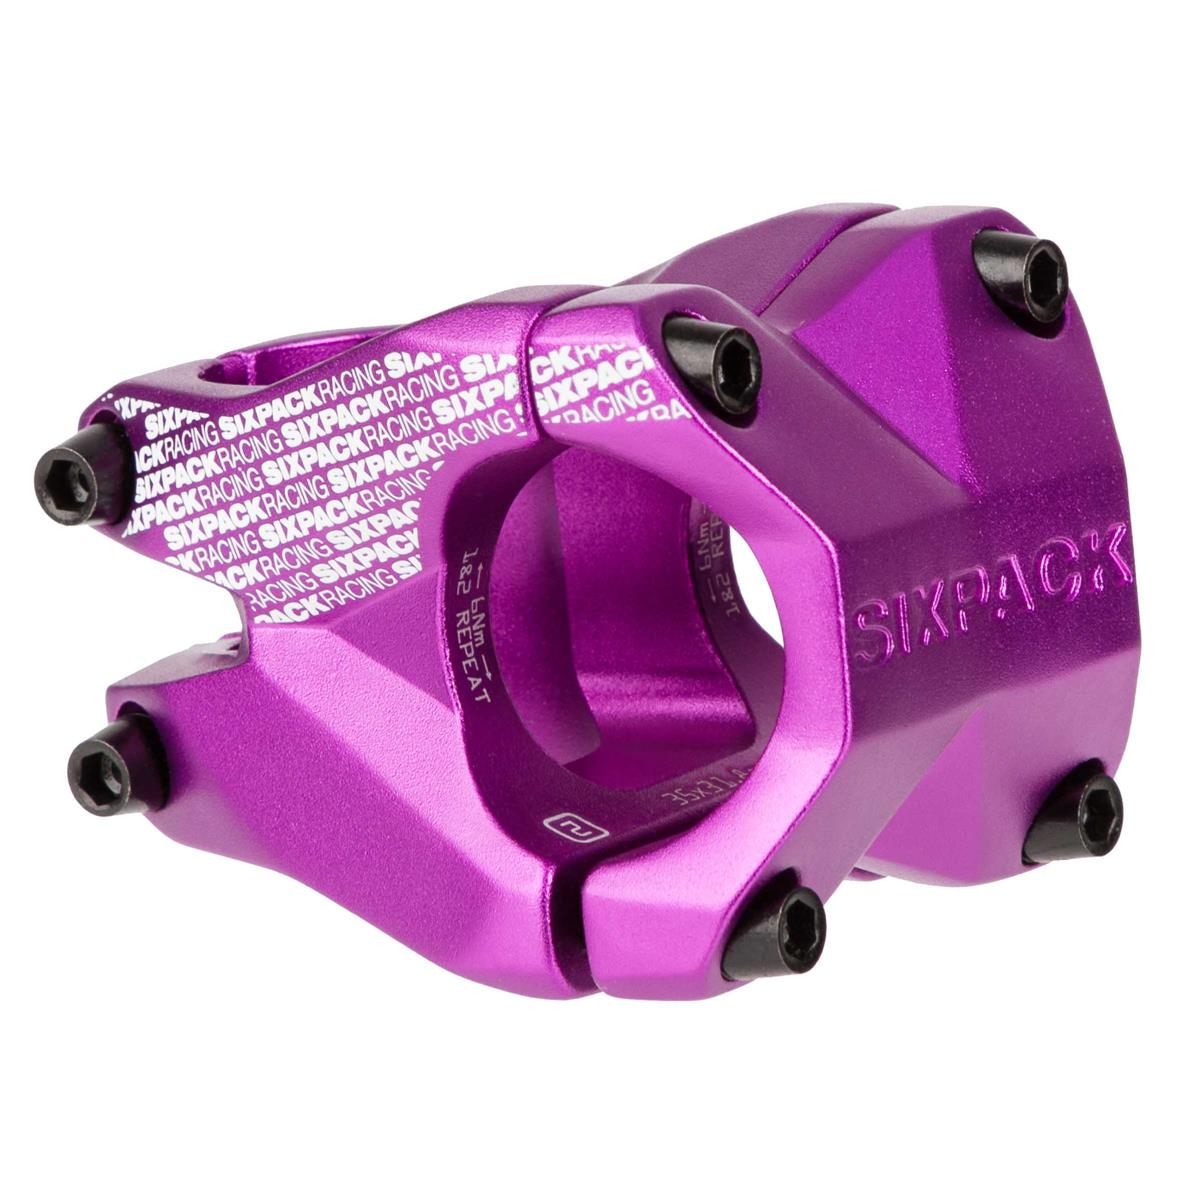 Sixpack MTB Stem Menace Purple, 31.8 mm, 35 mm Reach